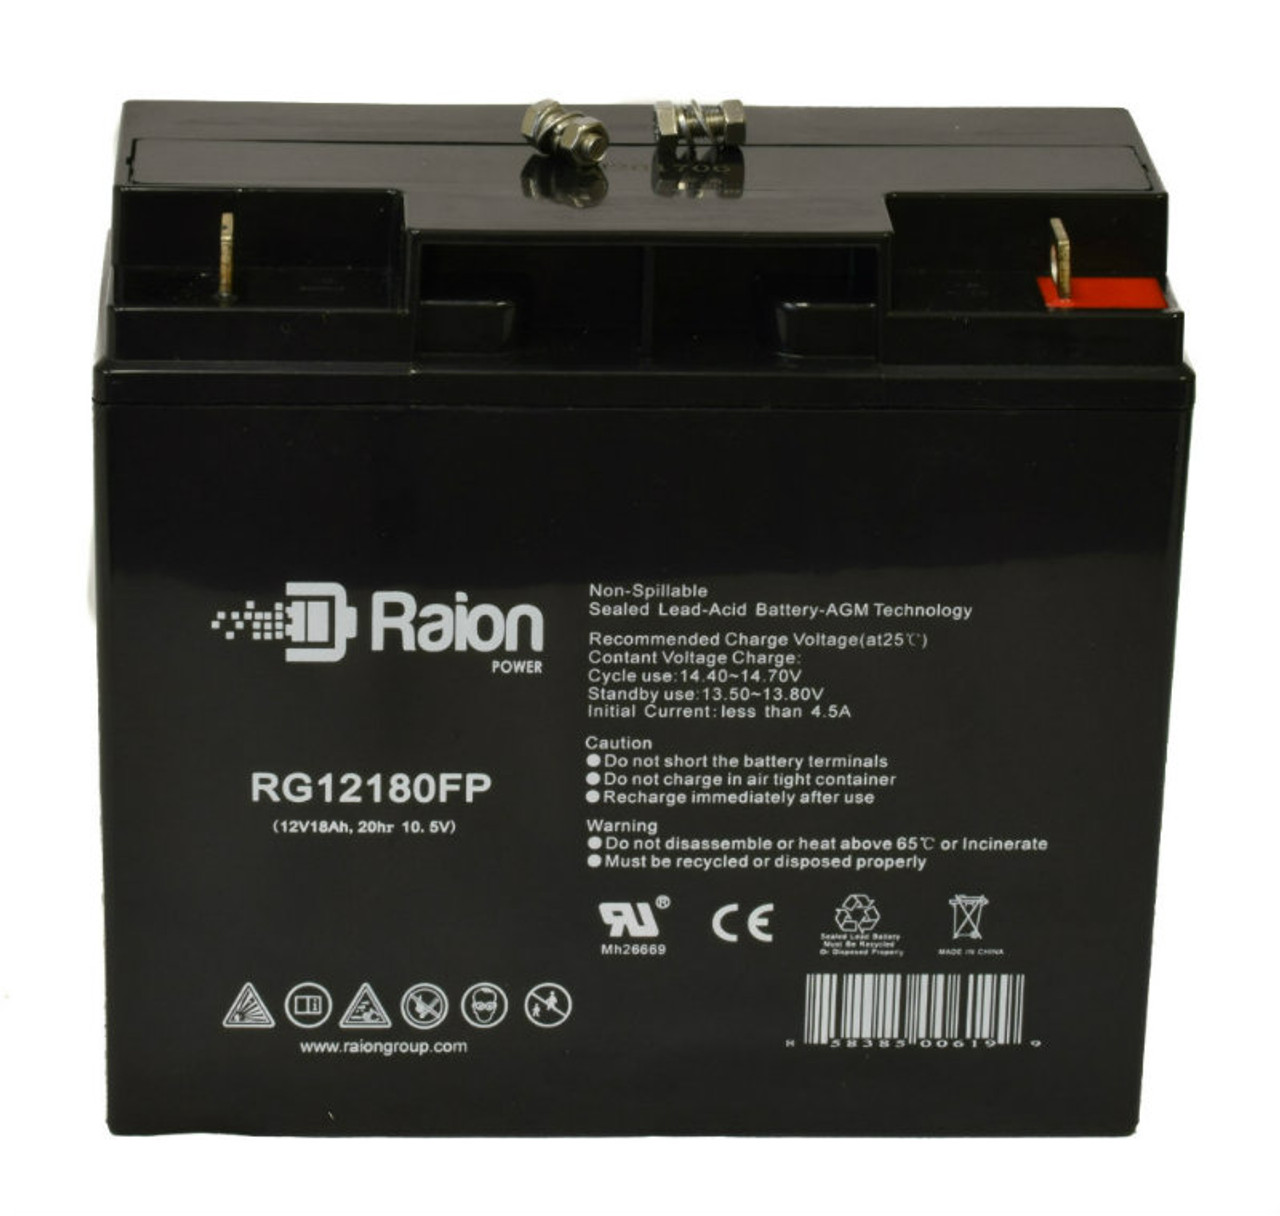 Raion Power RG12180FP 12V 18Ah Lead Acid Battery for Daymak Chameleon